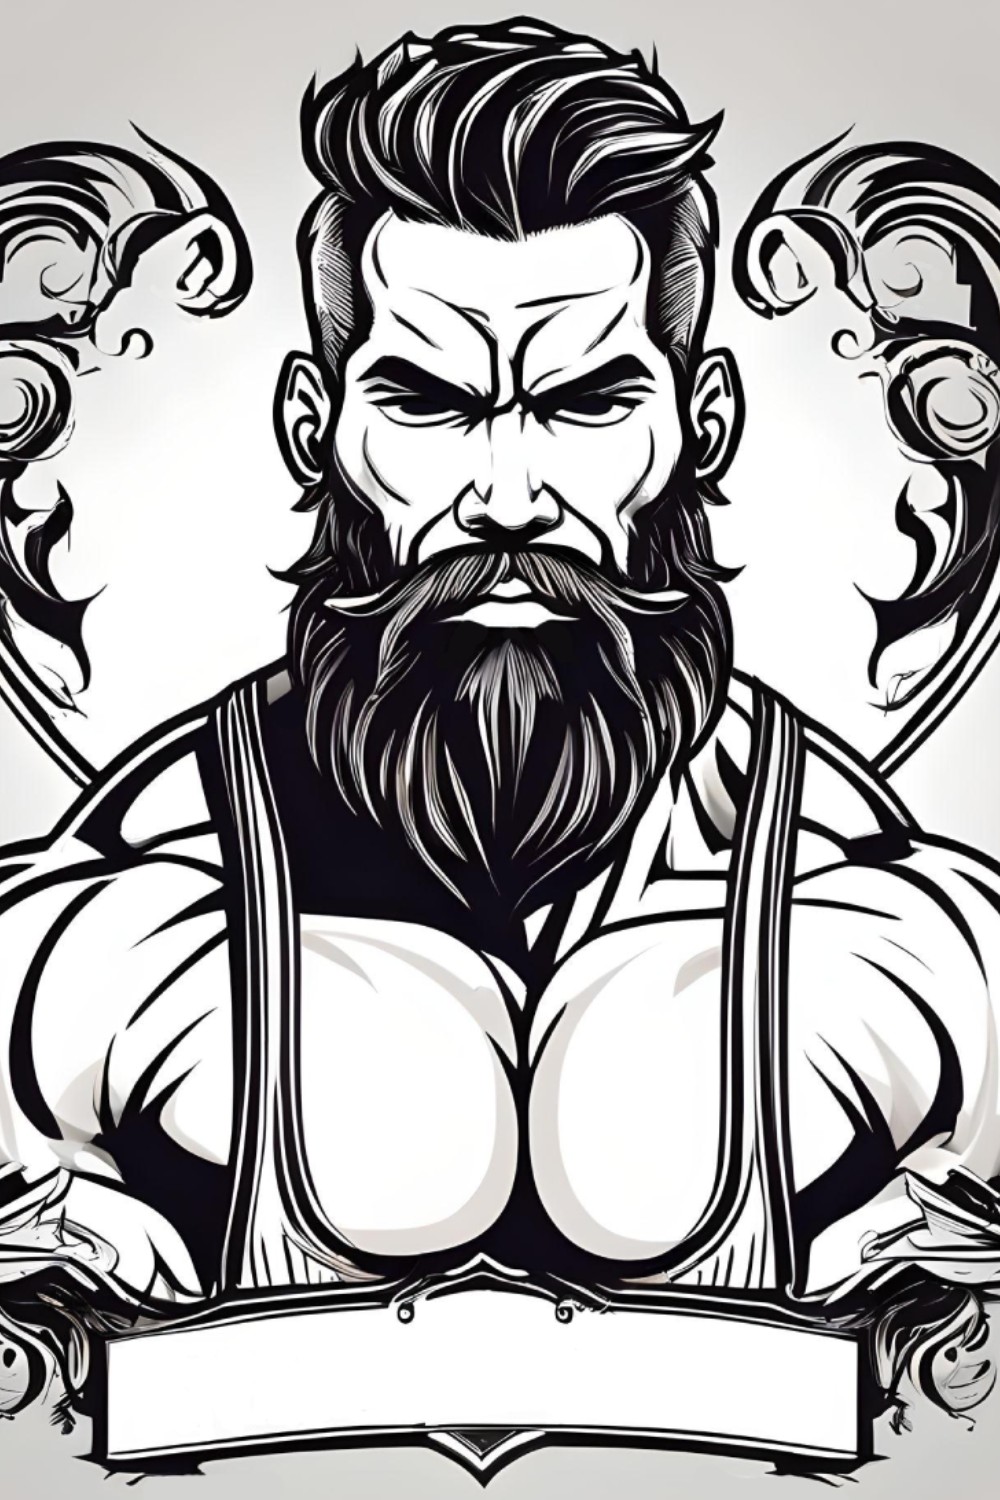 Brutal man, beard, logo, black and white, barbershop pinterest preview image.